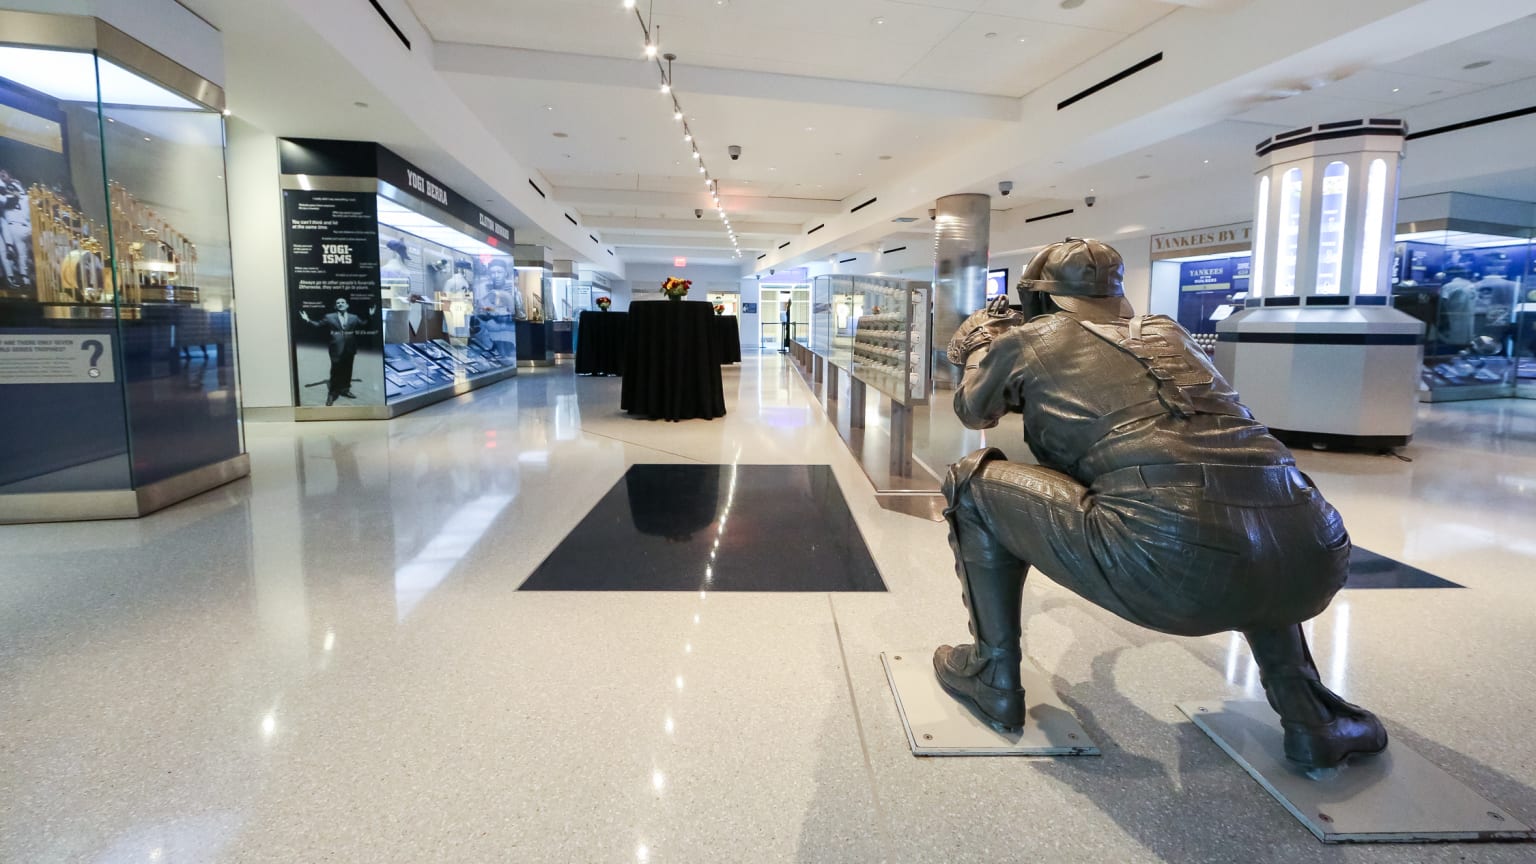 New York Yankees Museum presented by Bank of America